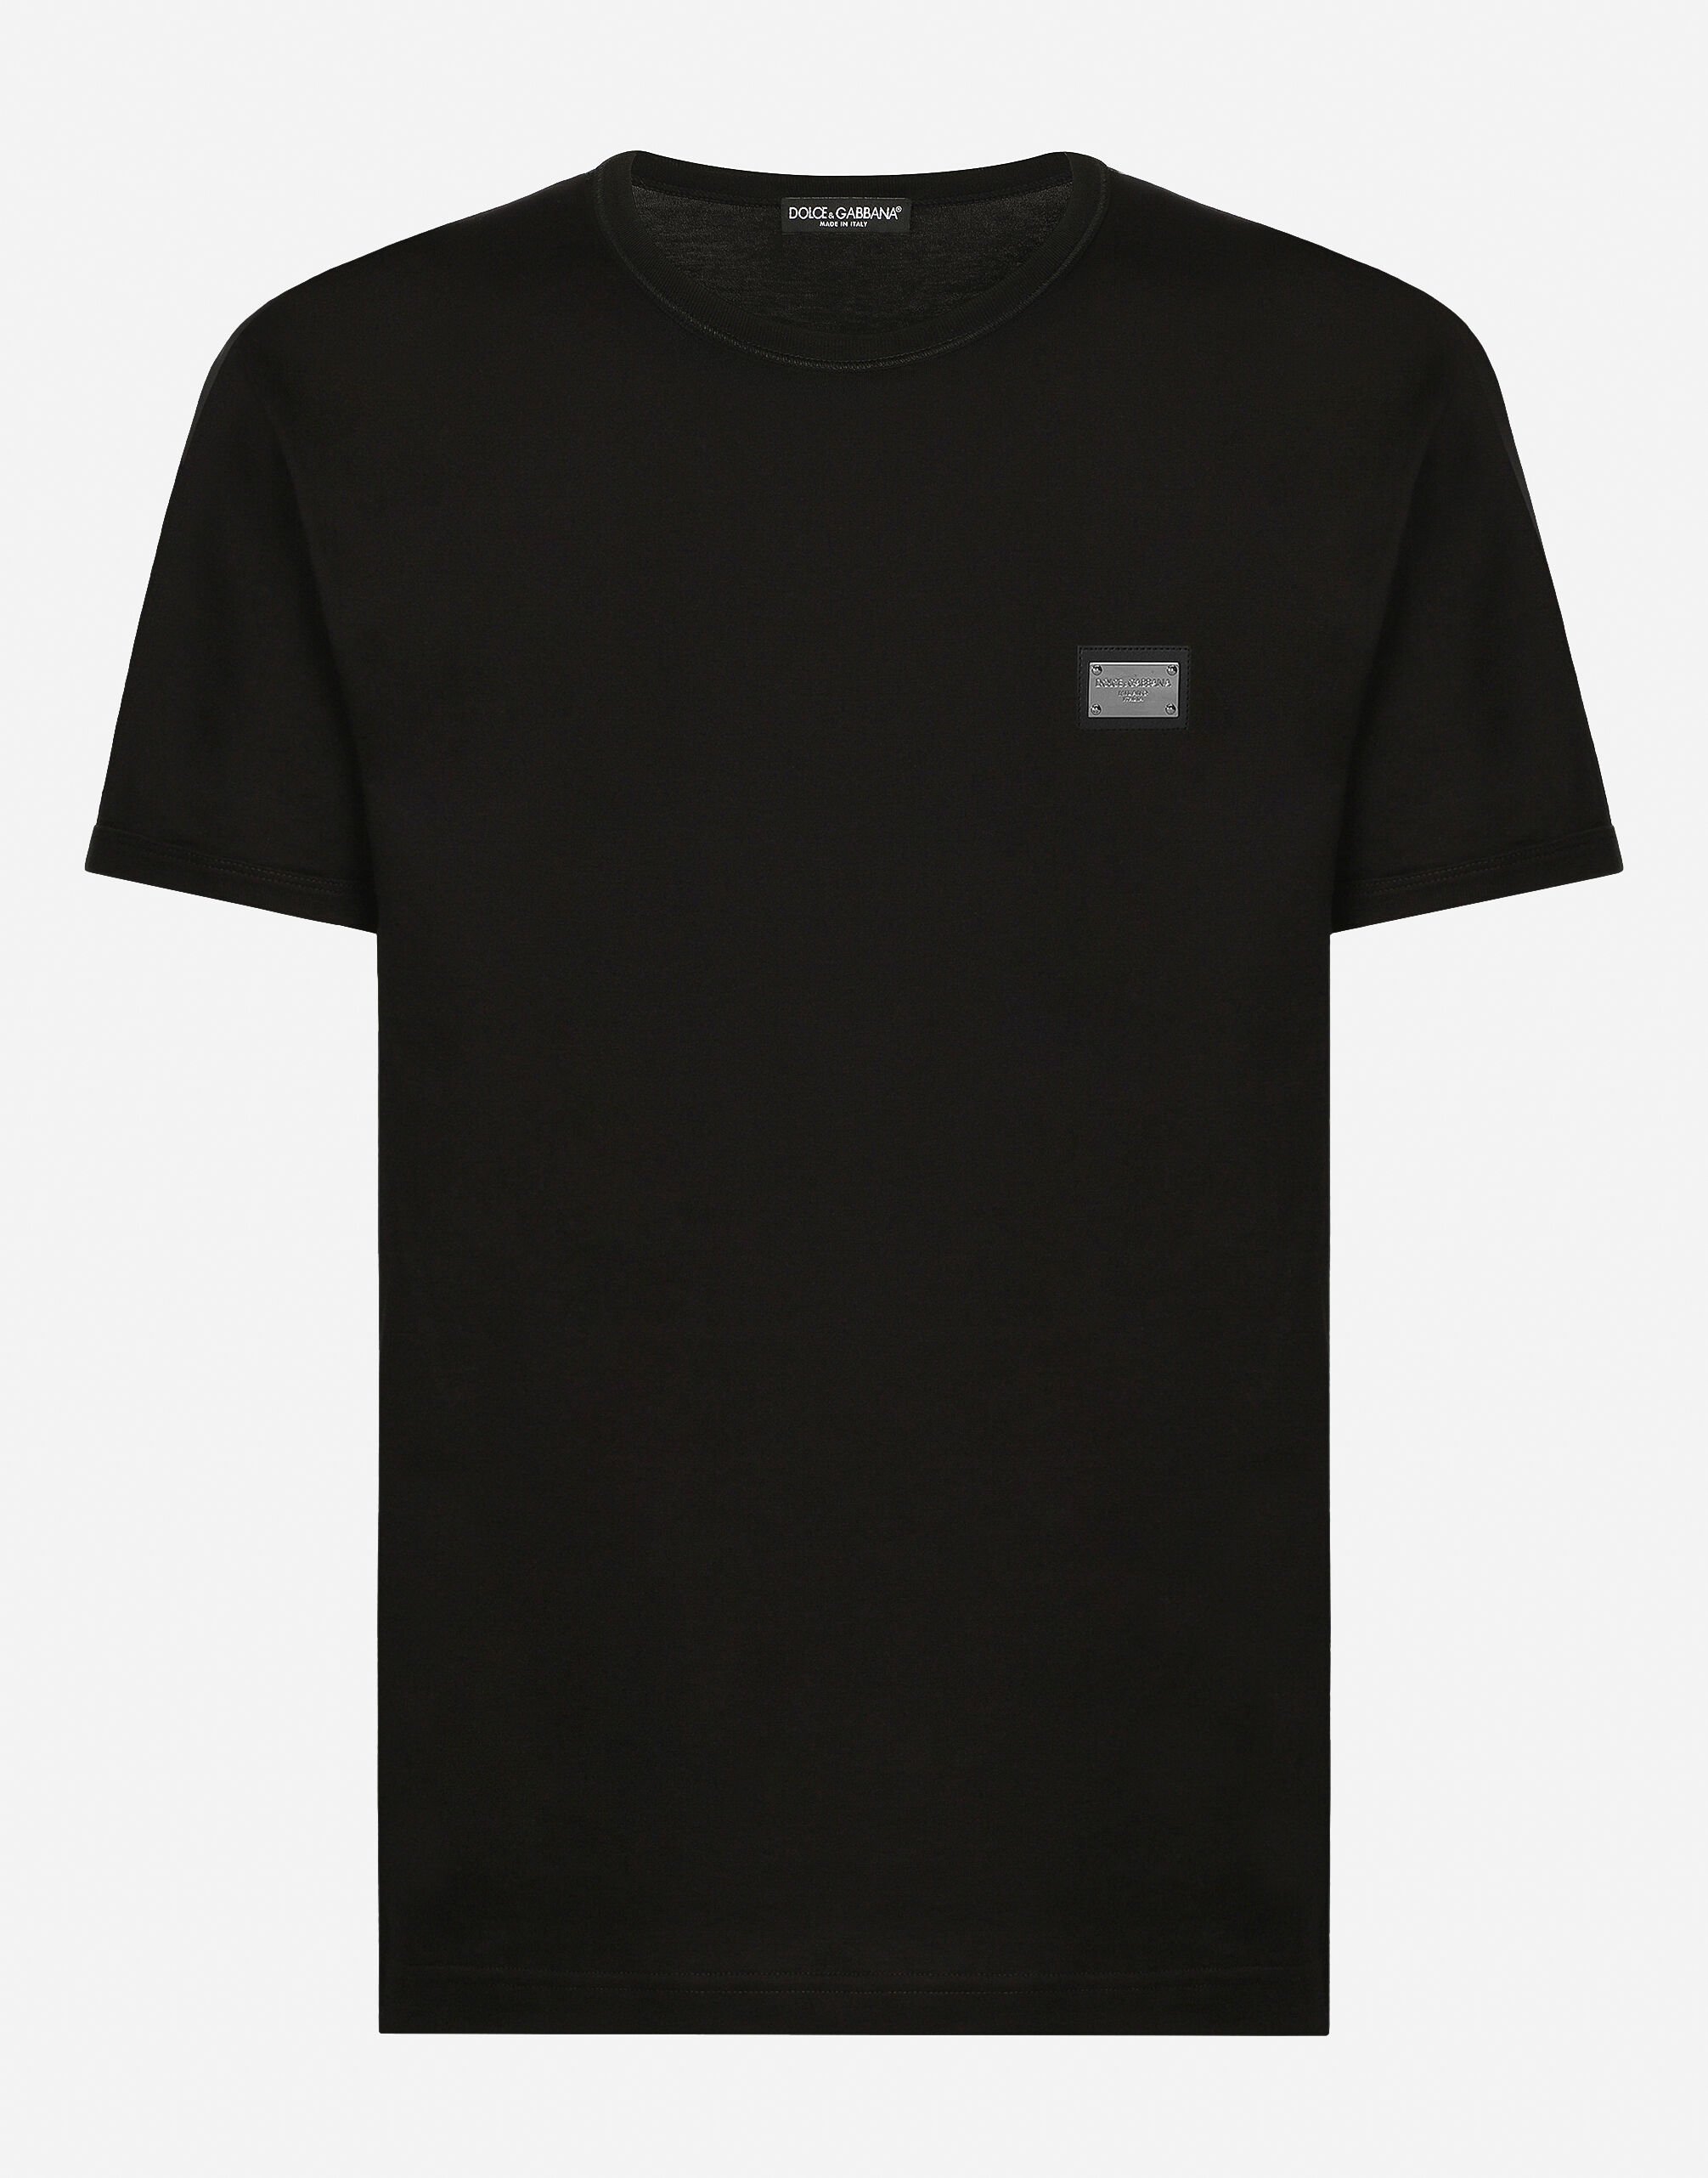 Dolce & Gabbana Cotton T-shirt with branded tag Print G8RG4THS7M4